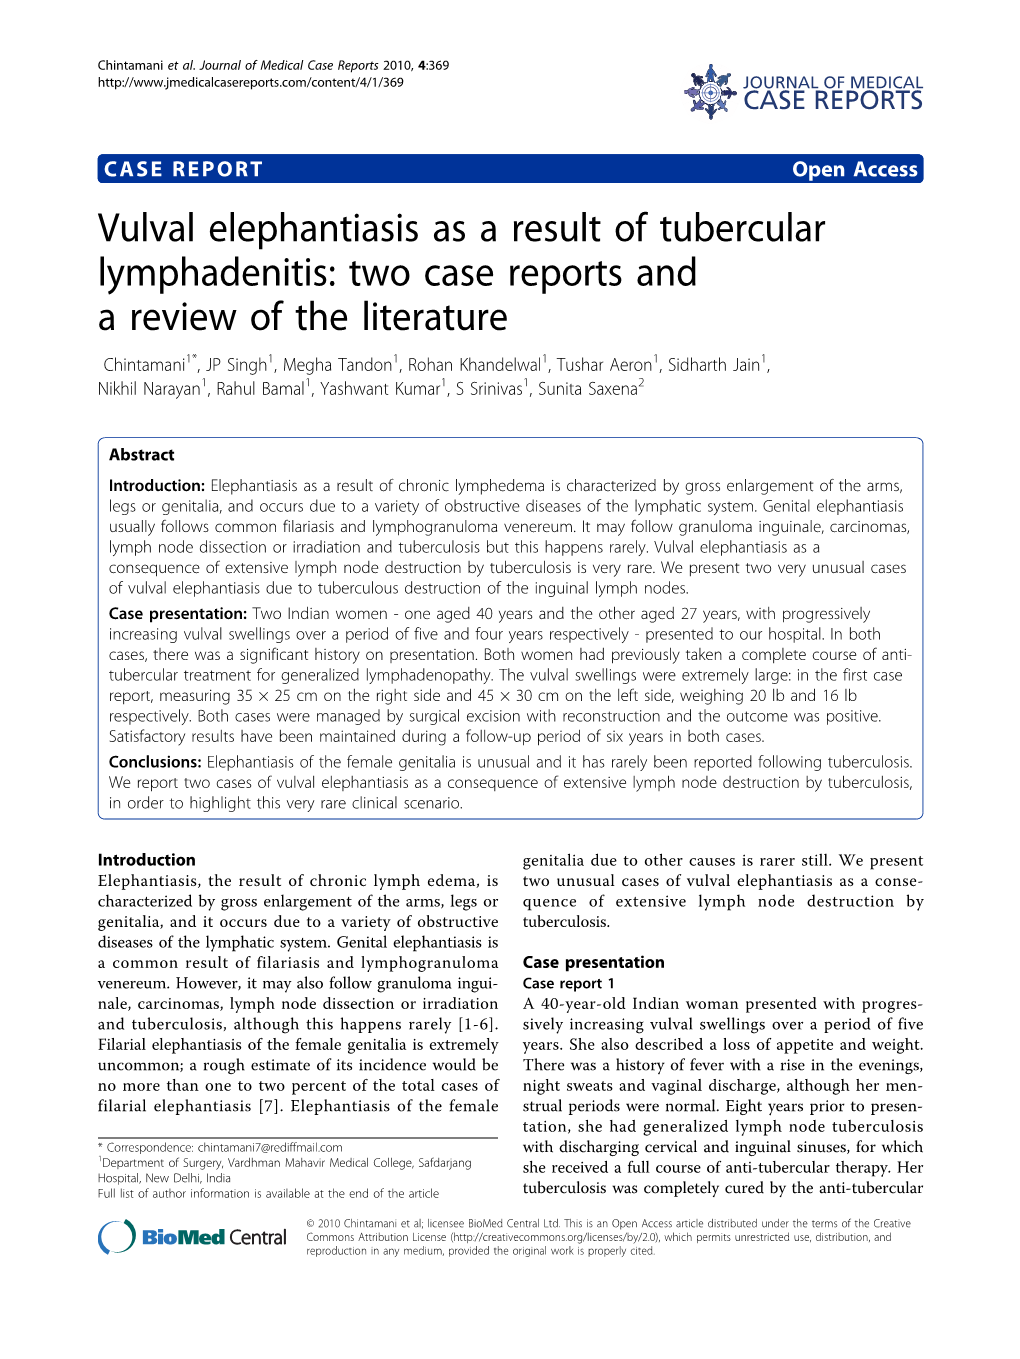 Vulval Elephantiasis As a Result of Tubercular